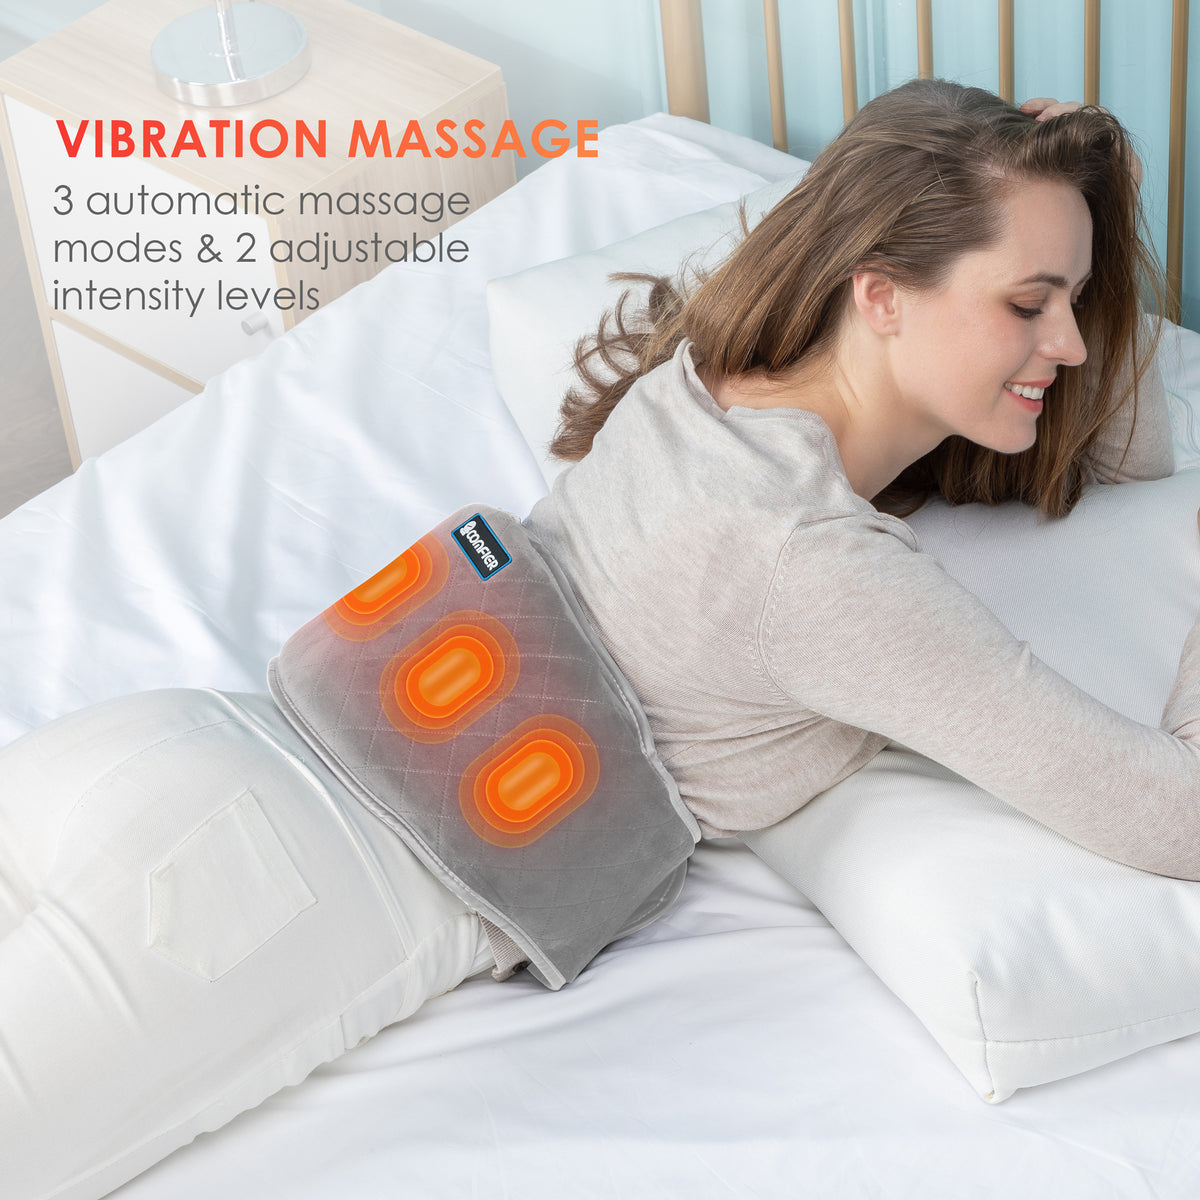 Comfier Shiatsu Neck and Shoulder Back Massager,Massage Pillow with Heat,Best Gift for Men/Women/Mom/Dad - 6302, USA